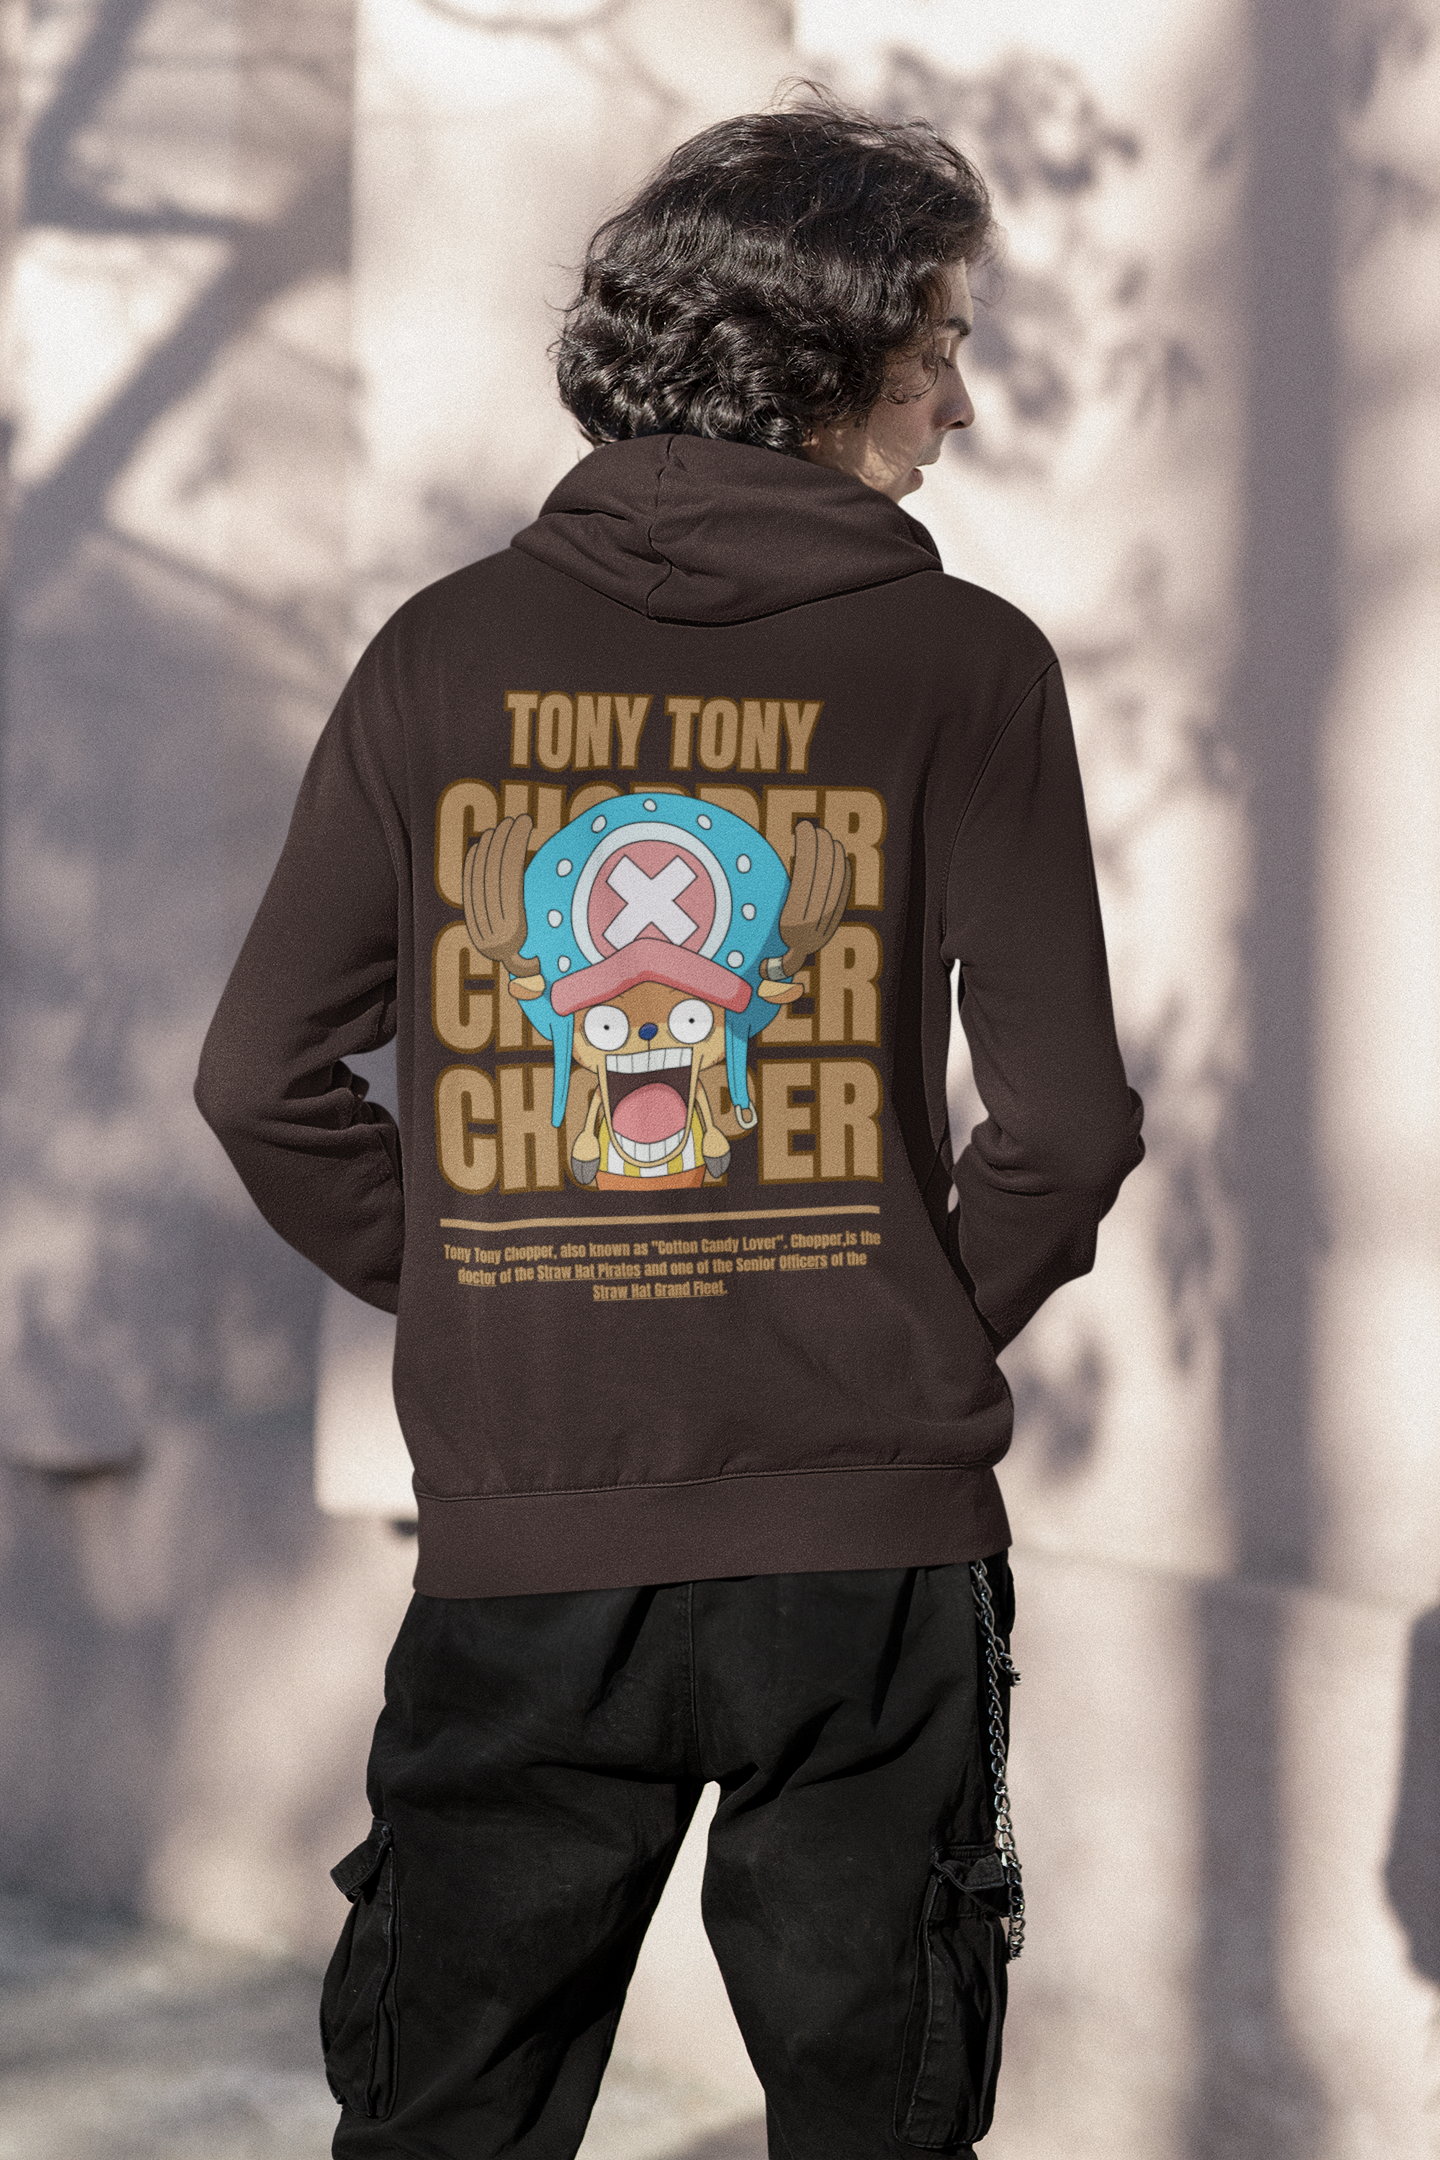 Tony Chopper | One Piece | Premium Unisex Winter Hoodie